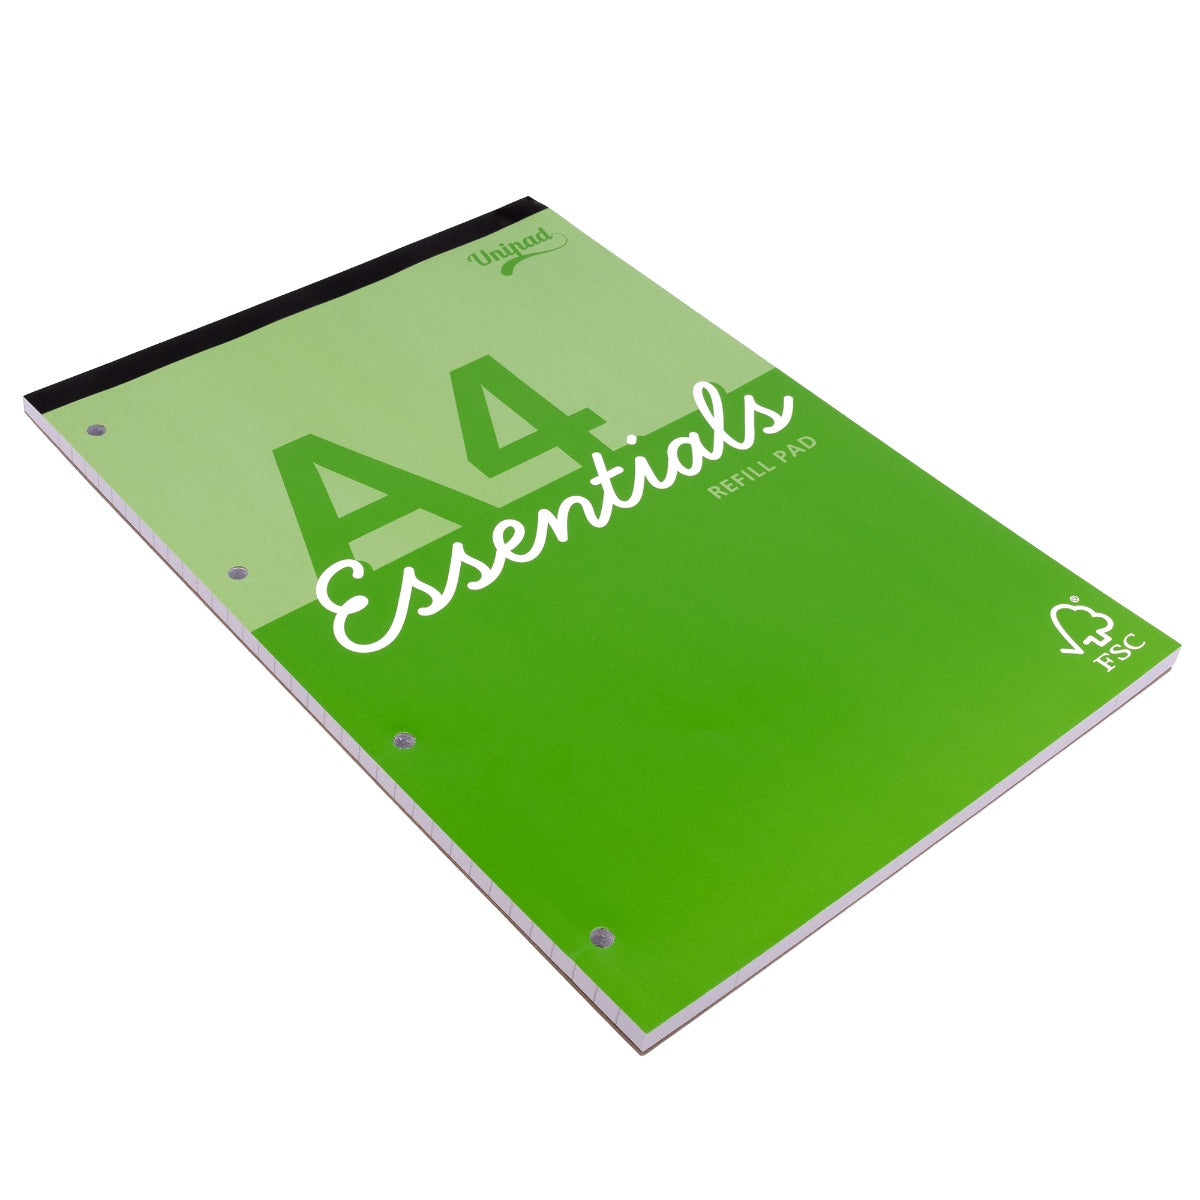 Pukka Pad Essentials A4 Refill Pad - Green cover - Individual